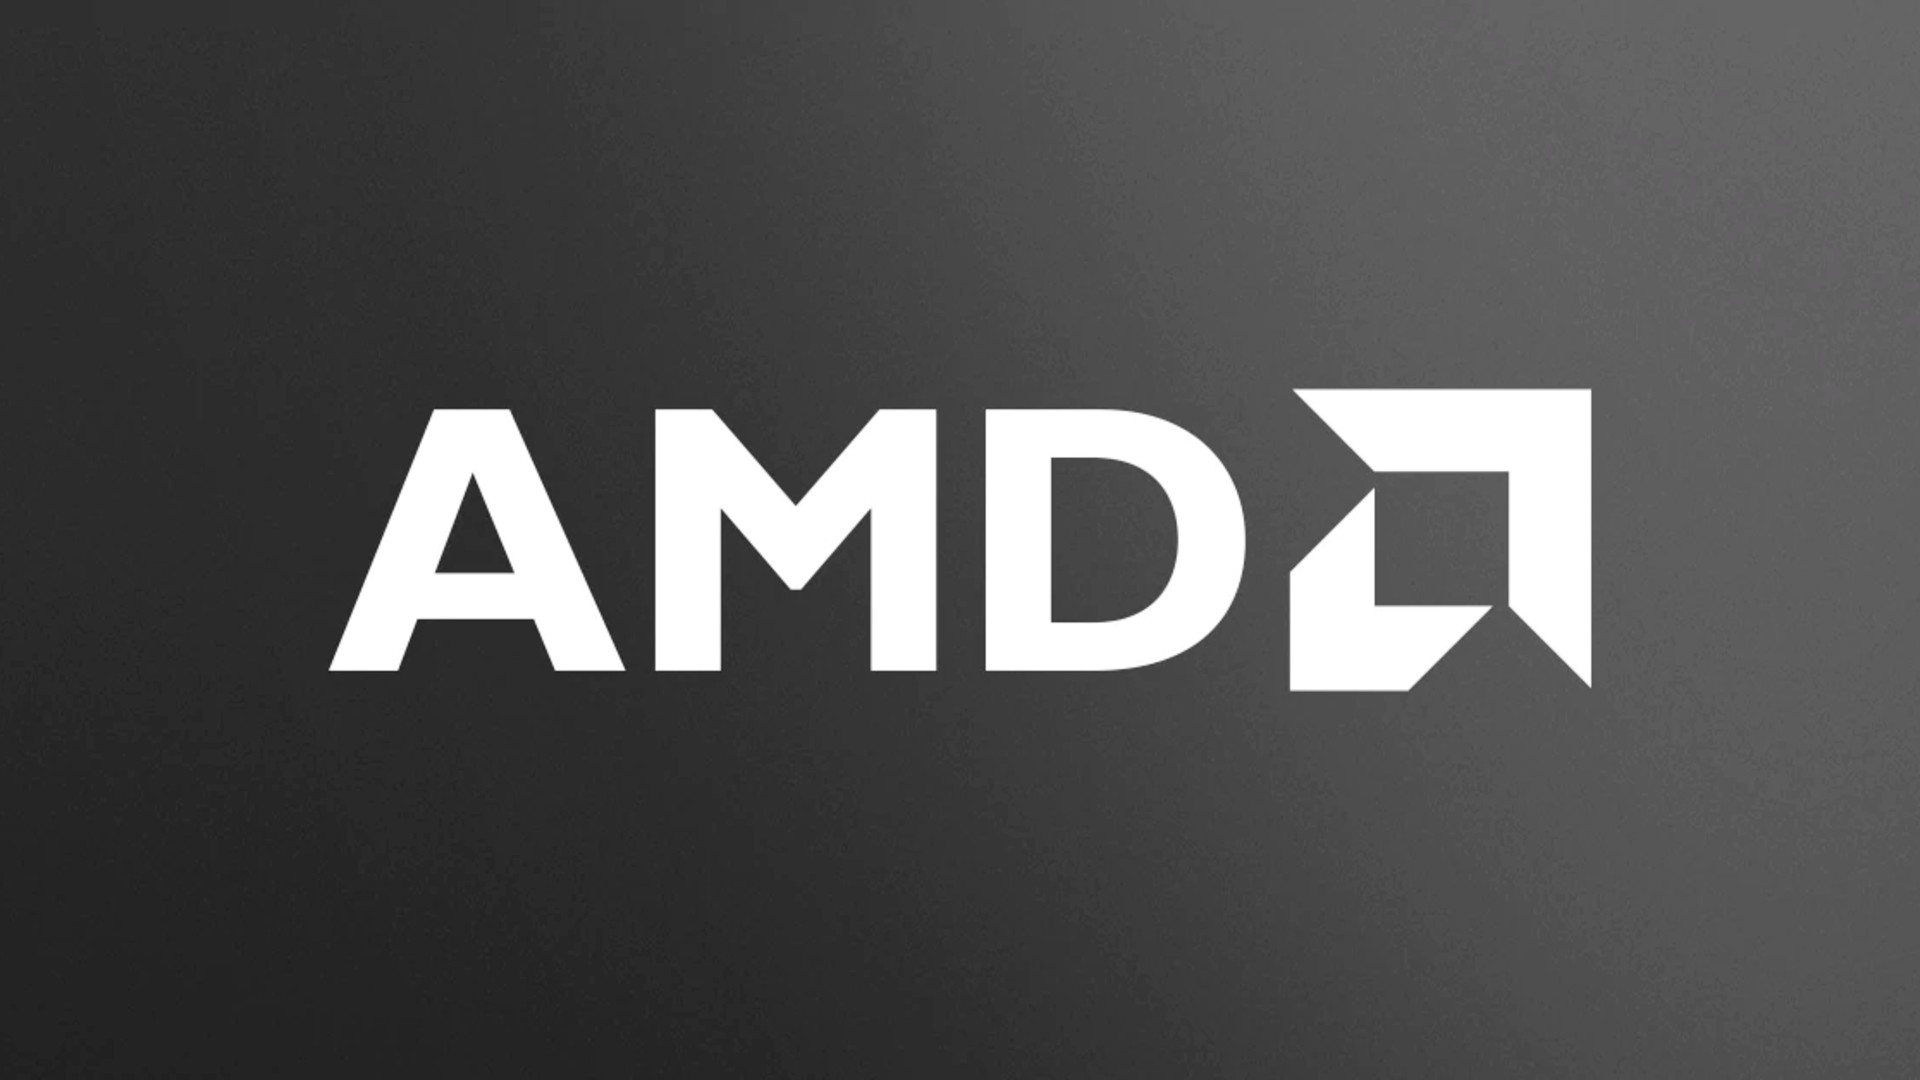 Amd-logo